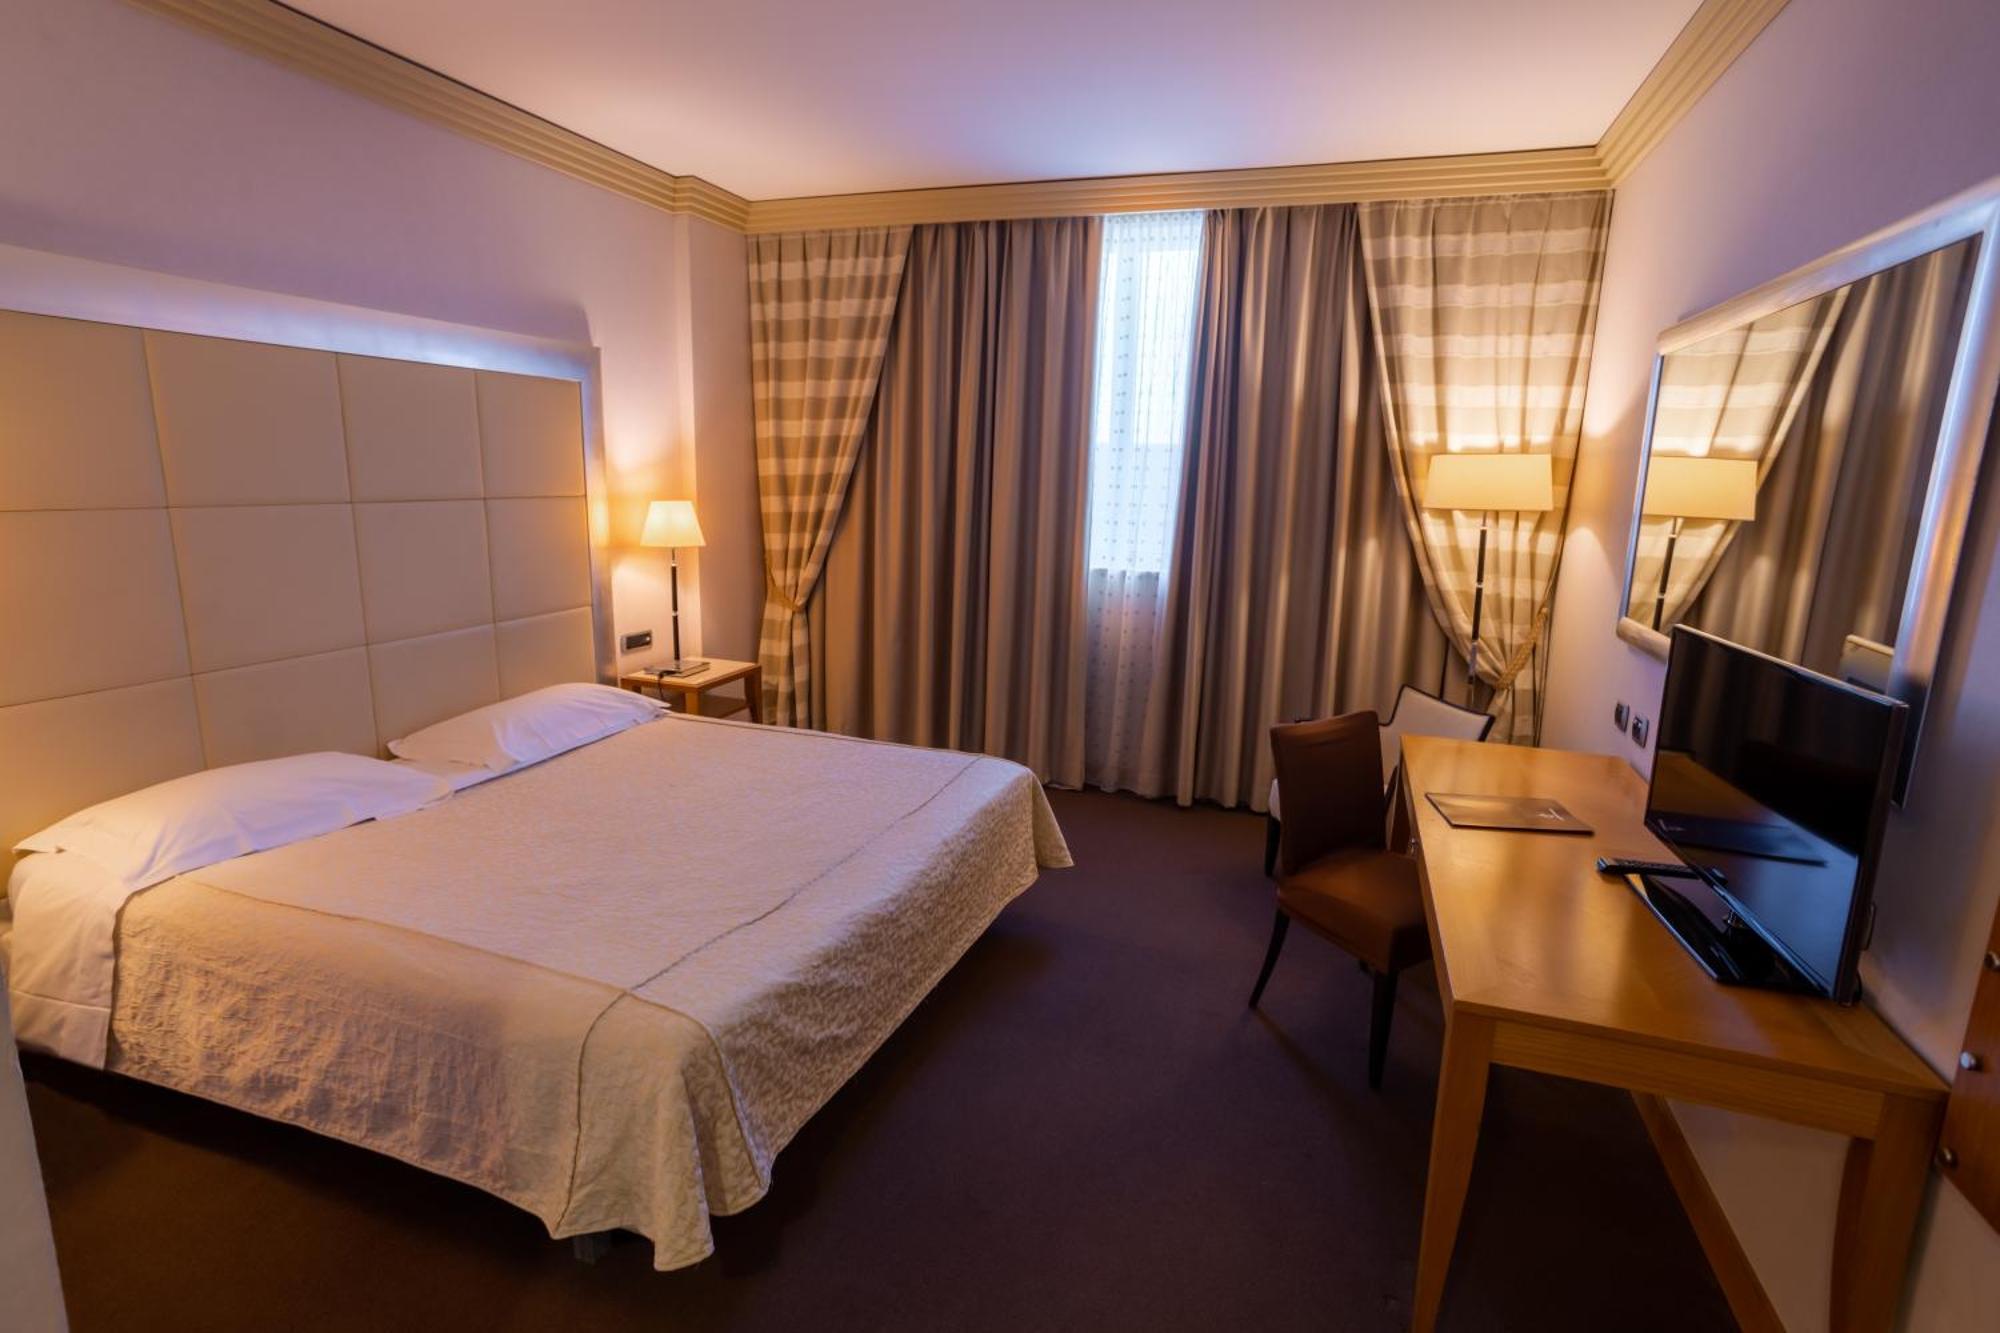 Papillo Hotels & Resorts Roma Экстерьер фото